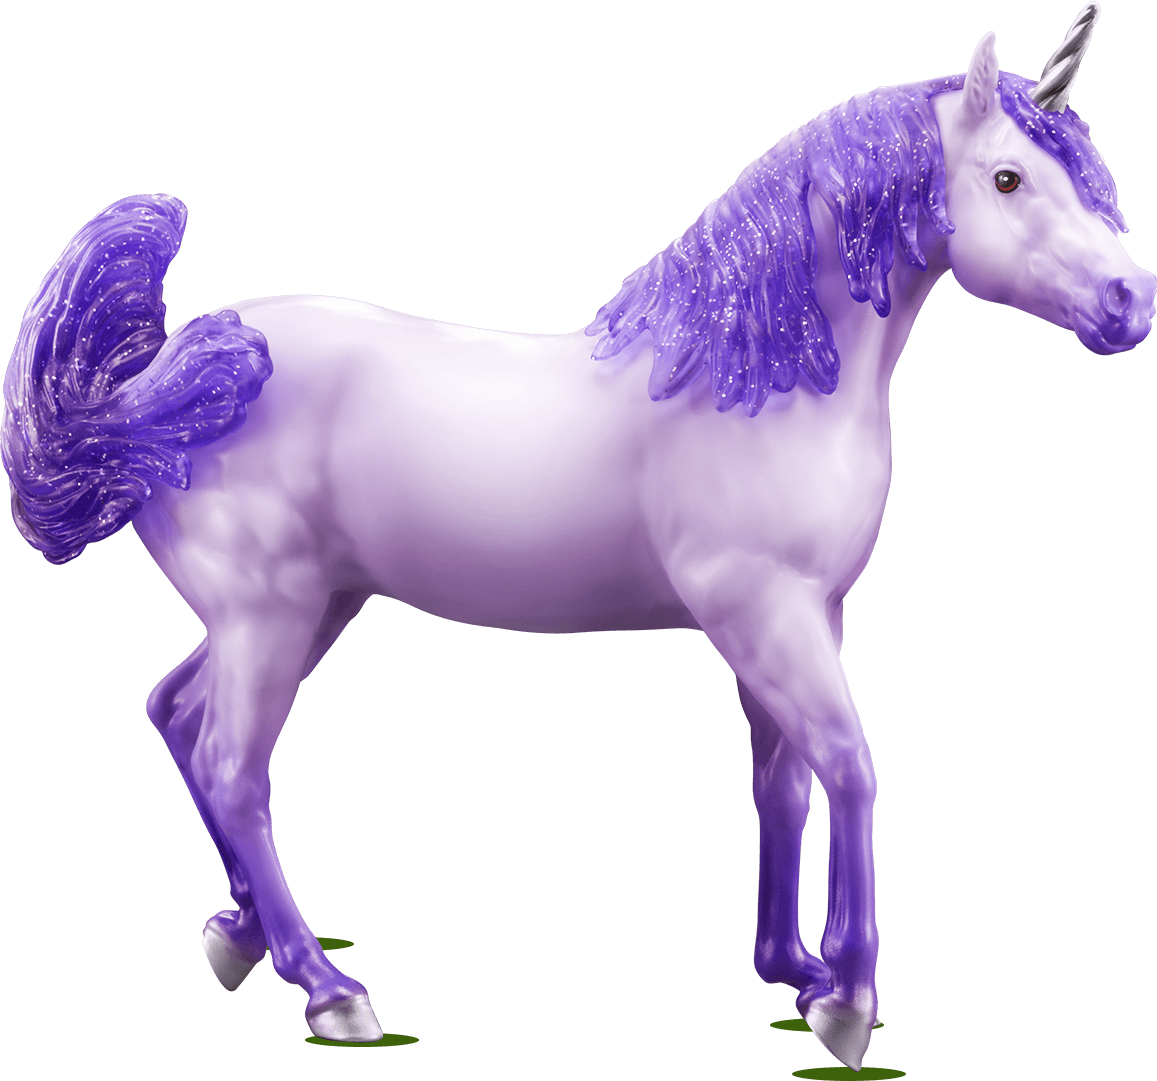 Celeste, a magical unicorn